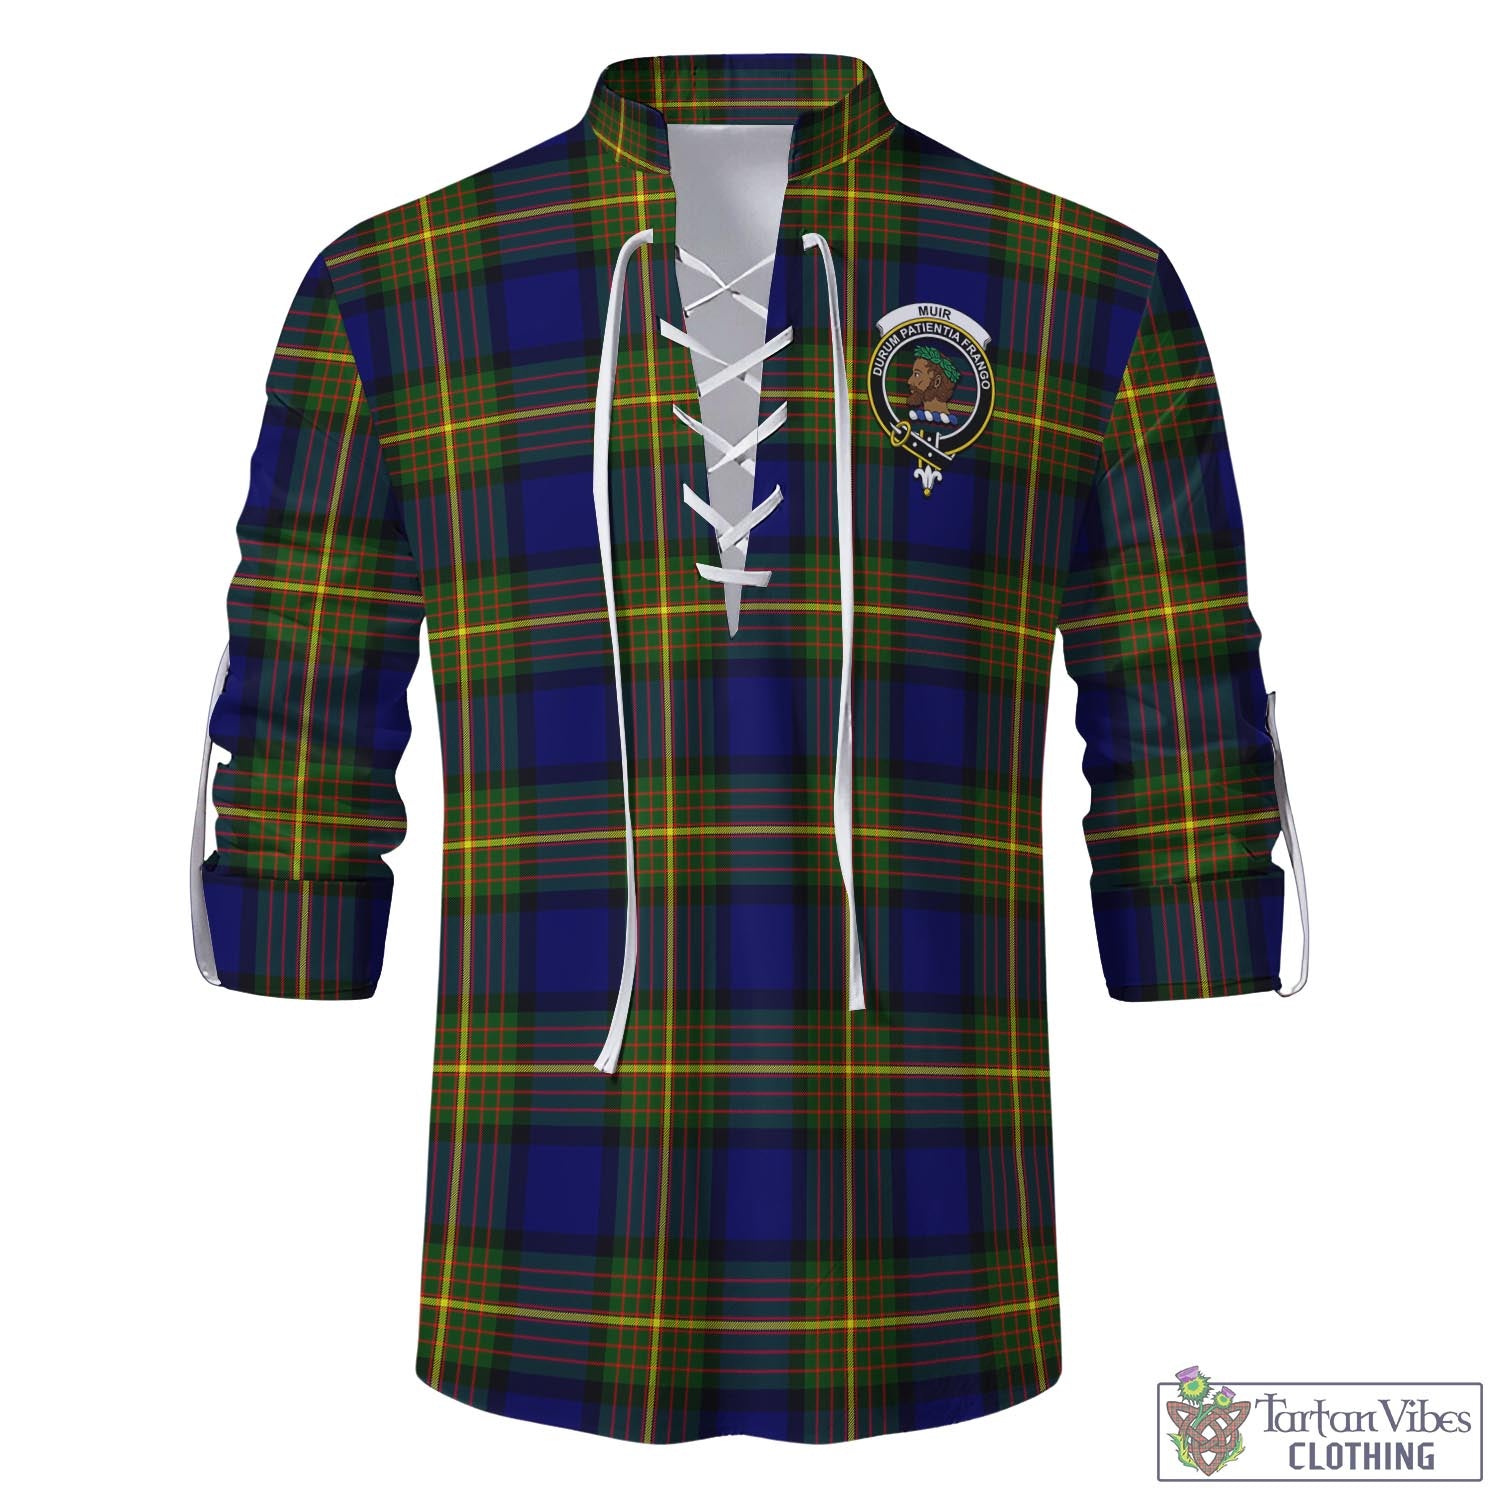 Tartan Vibes Clothing Muir Tartan Men's Scottish Traditional Jacobite Ghillie Kilt Shirt with Family Crest